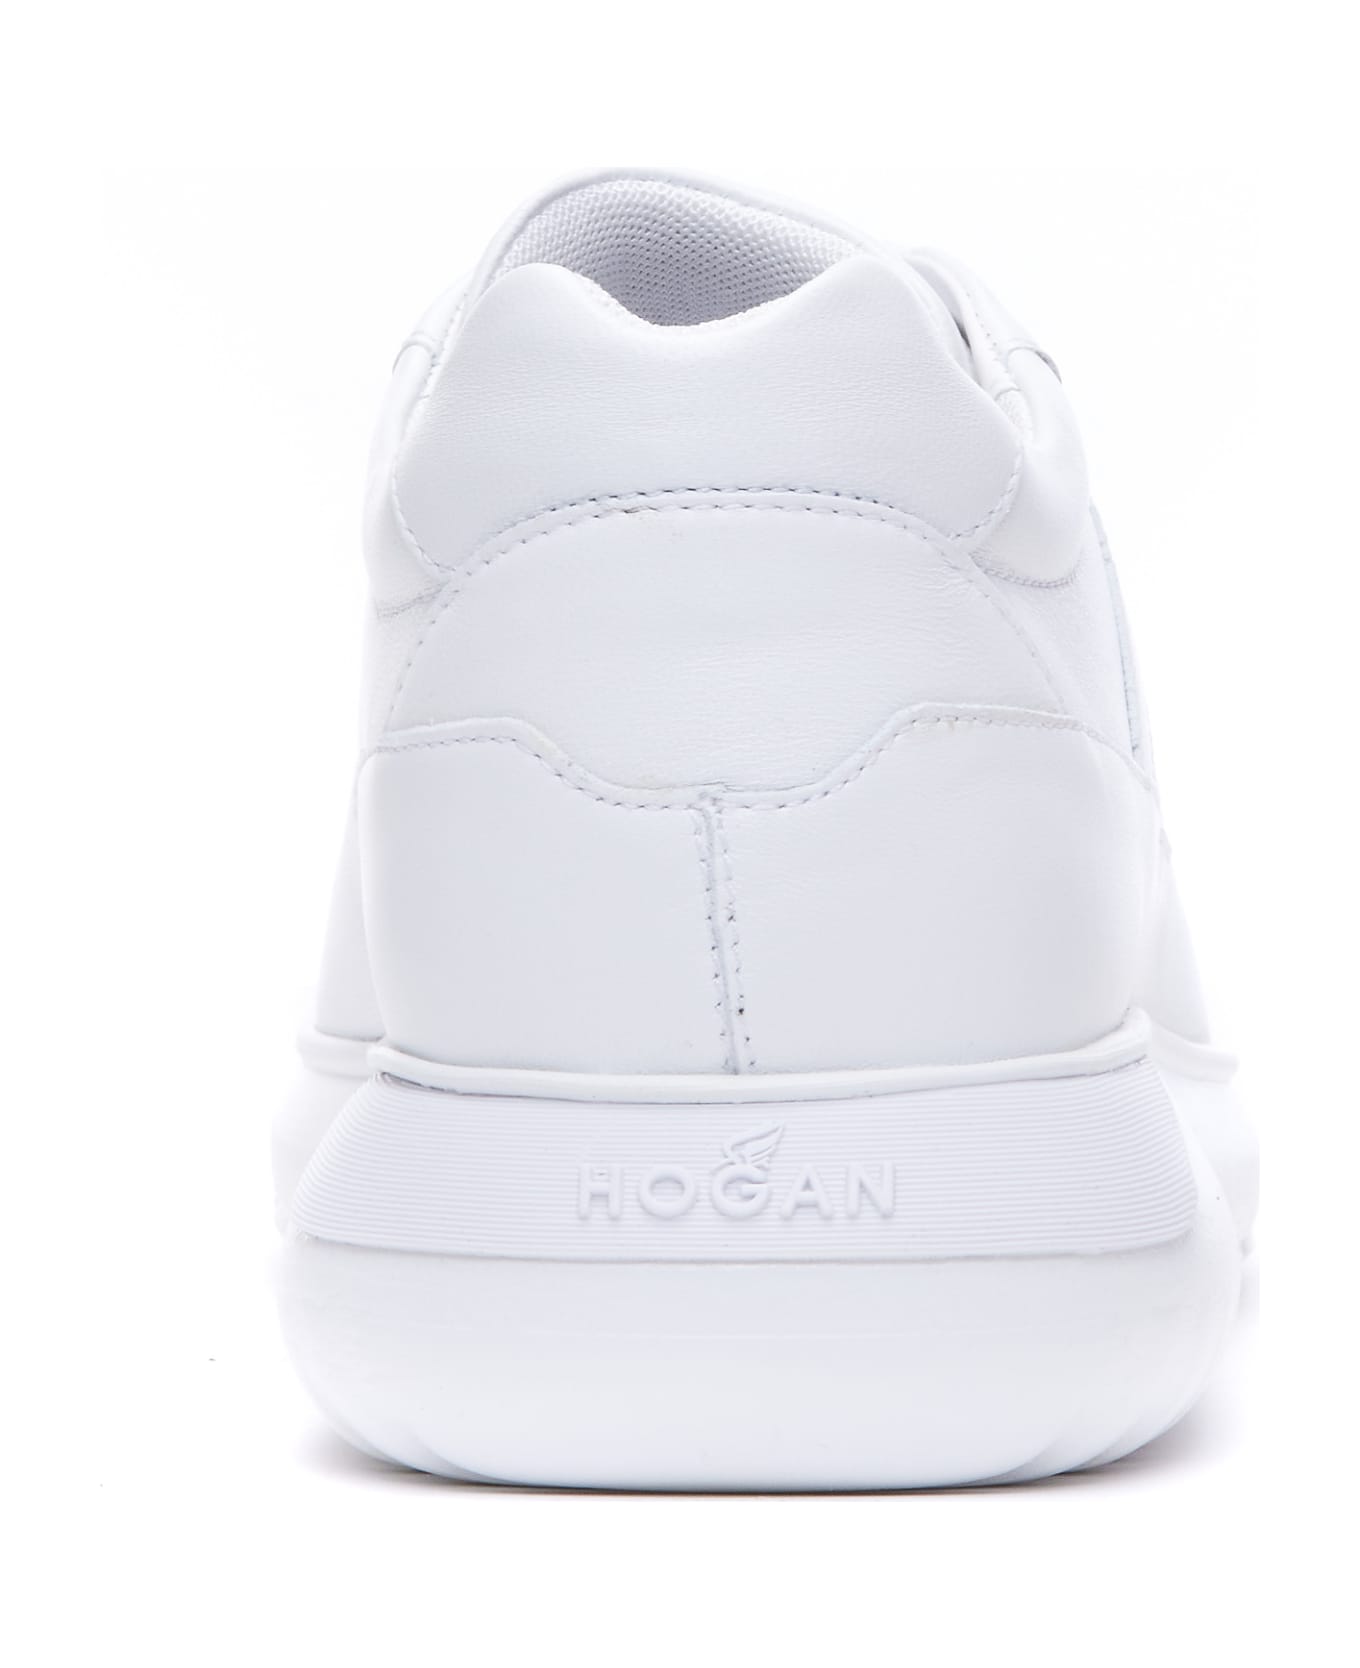 Hogan Interactive 3 Sneakers - White